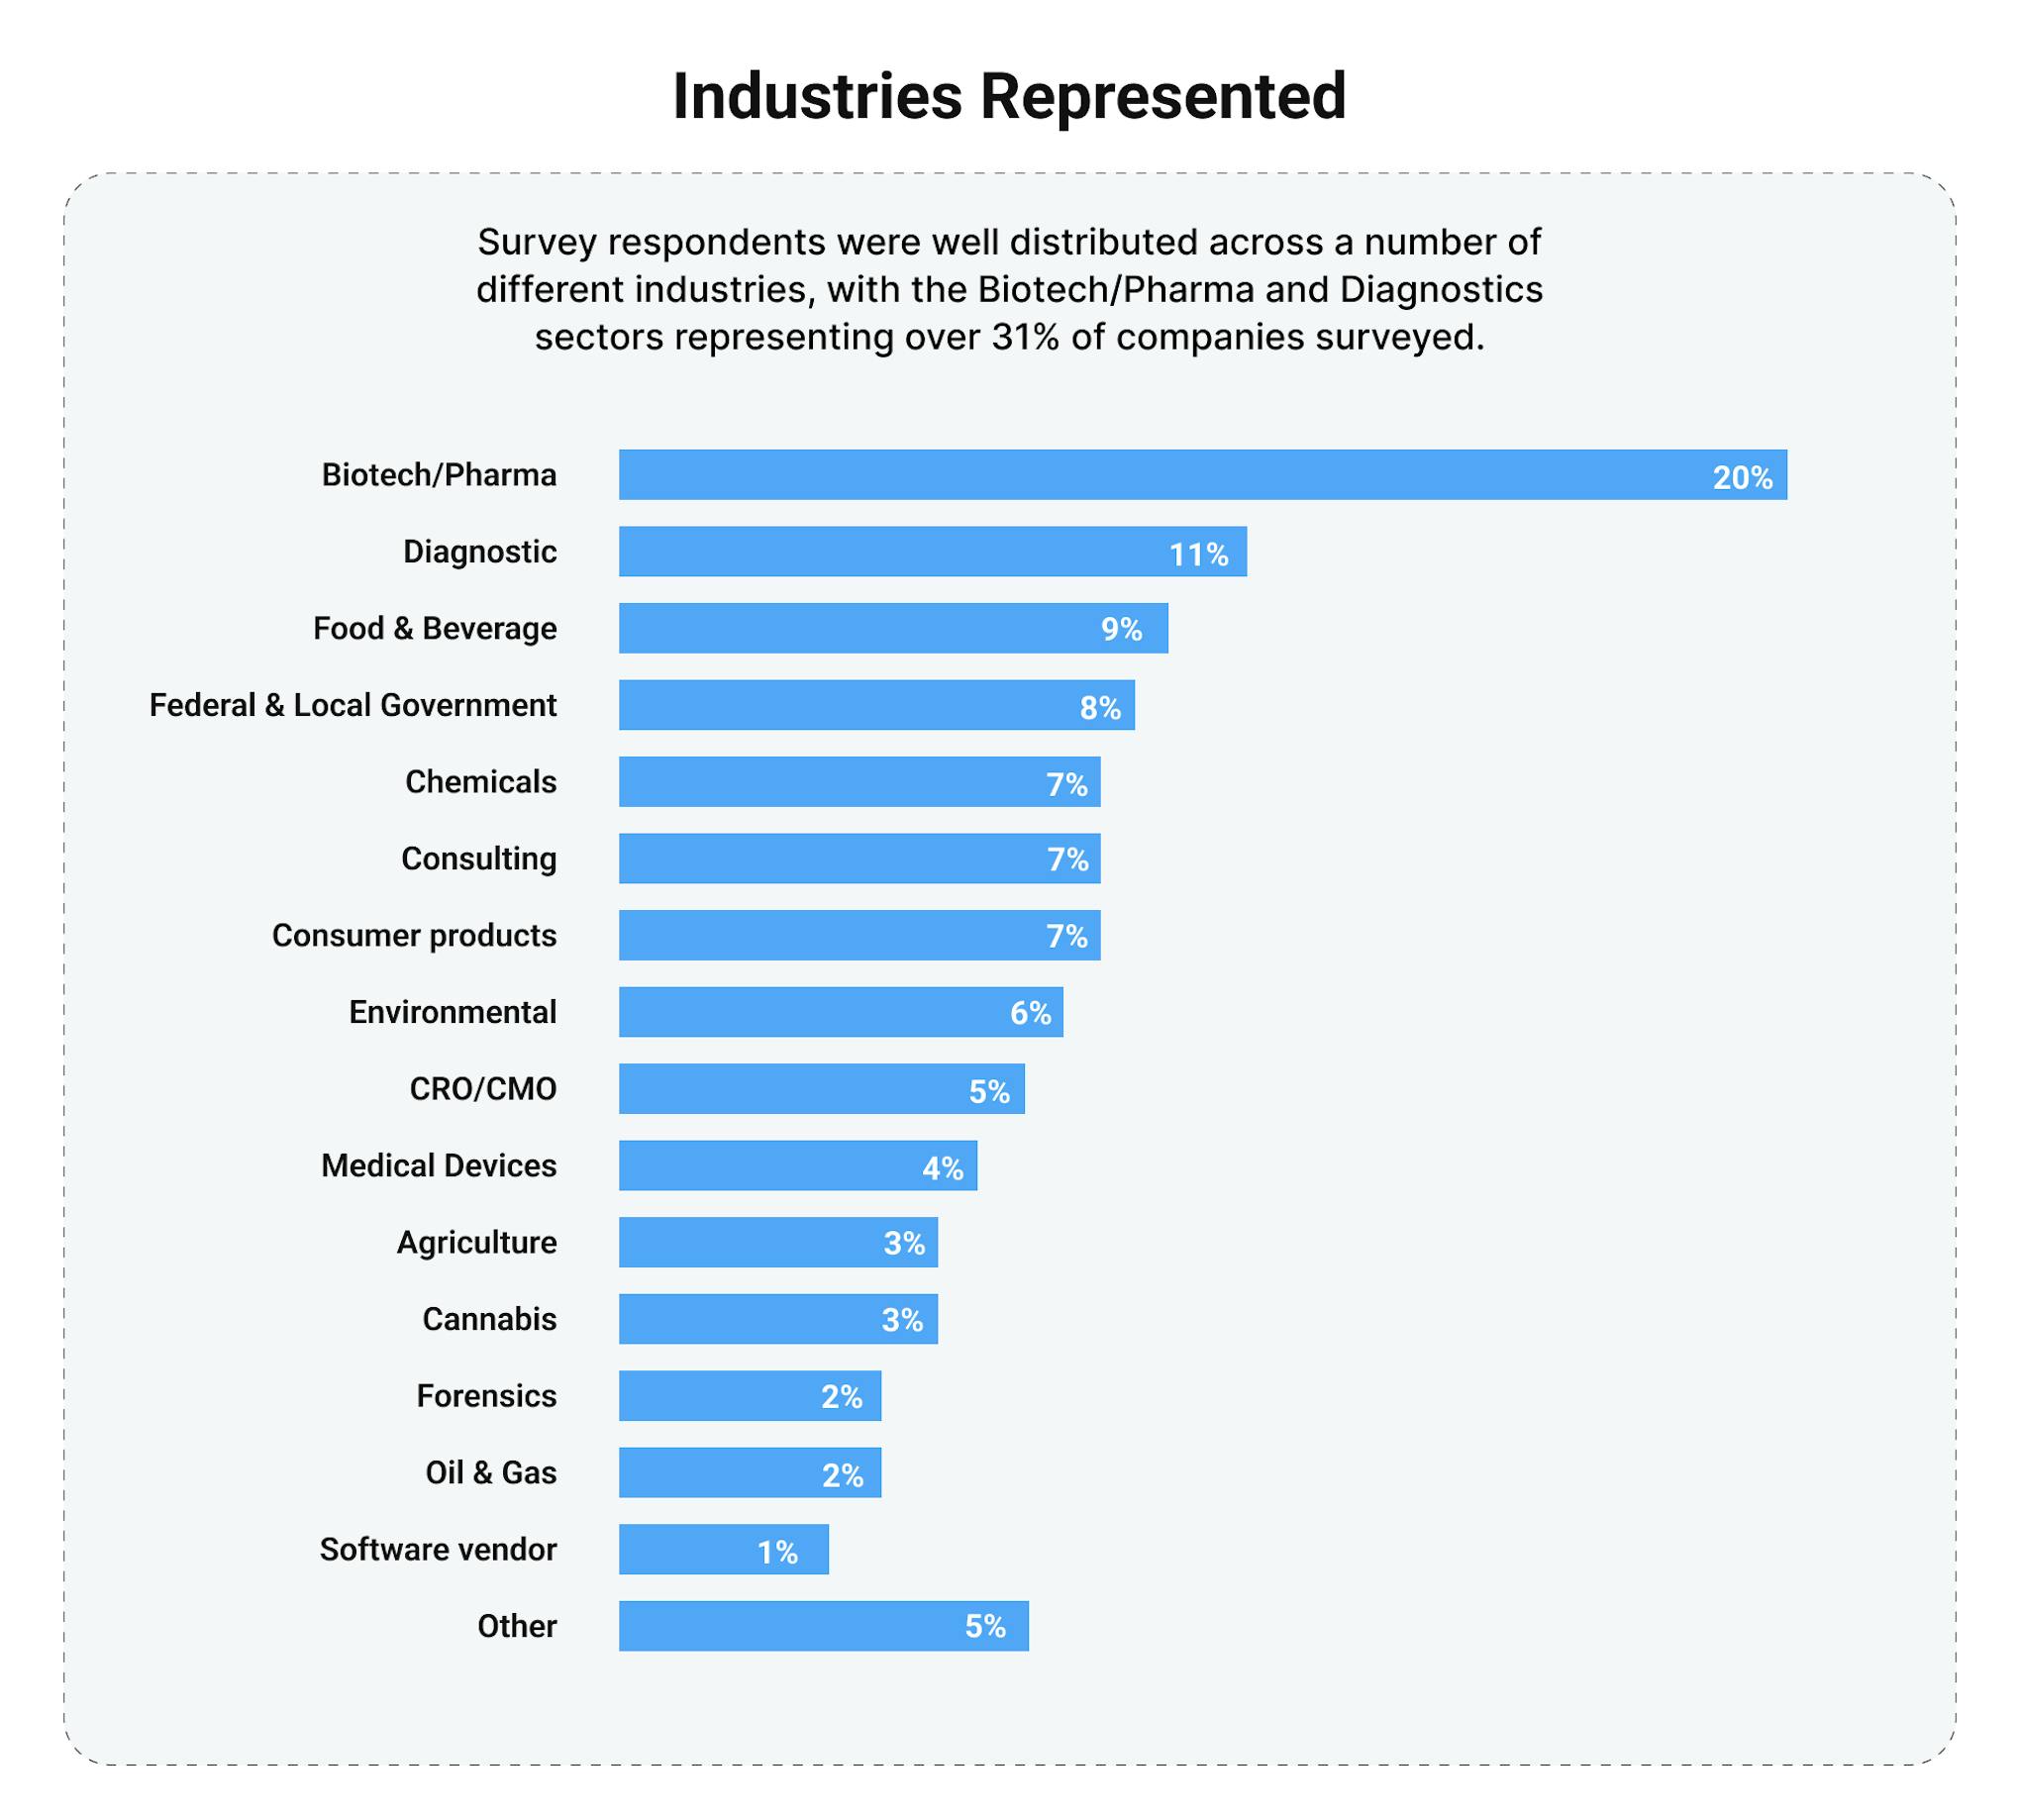 Industries Represented